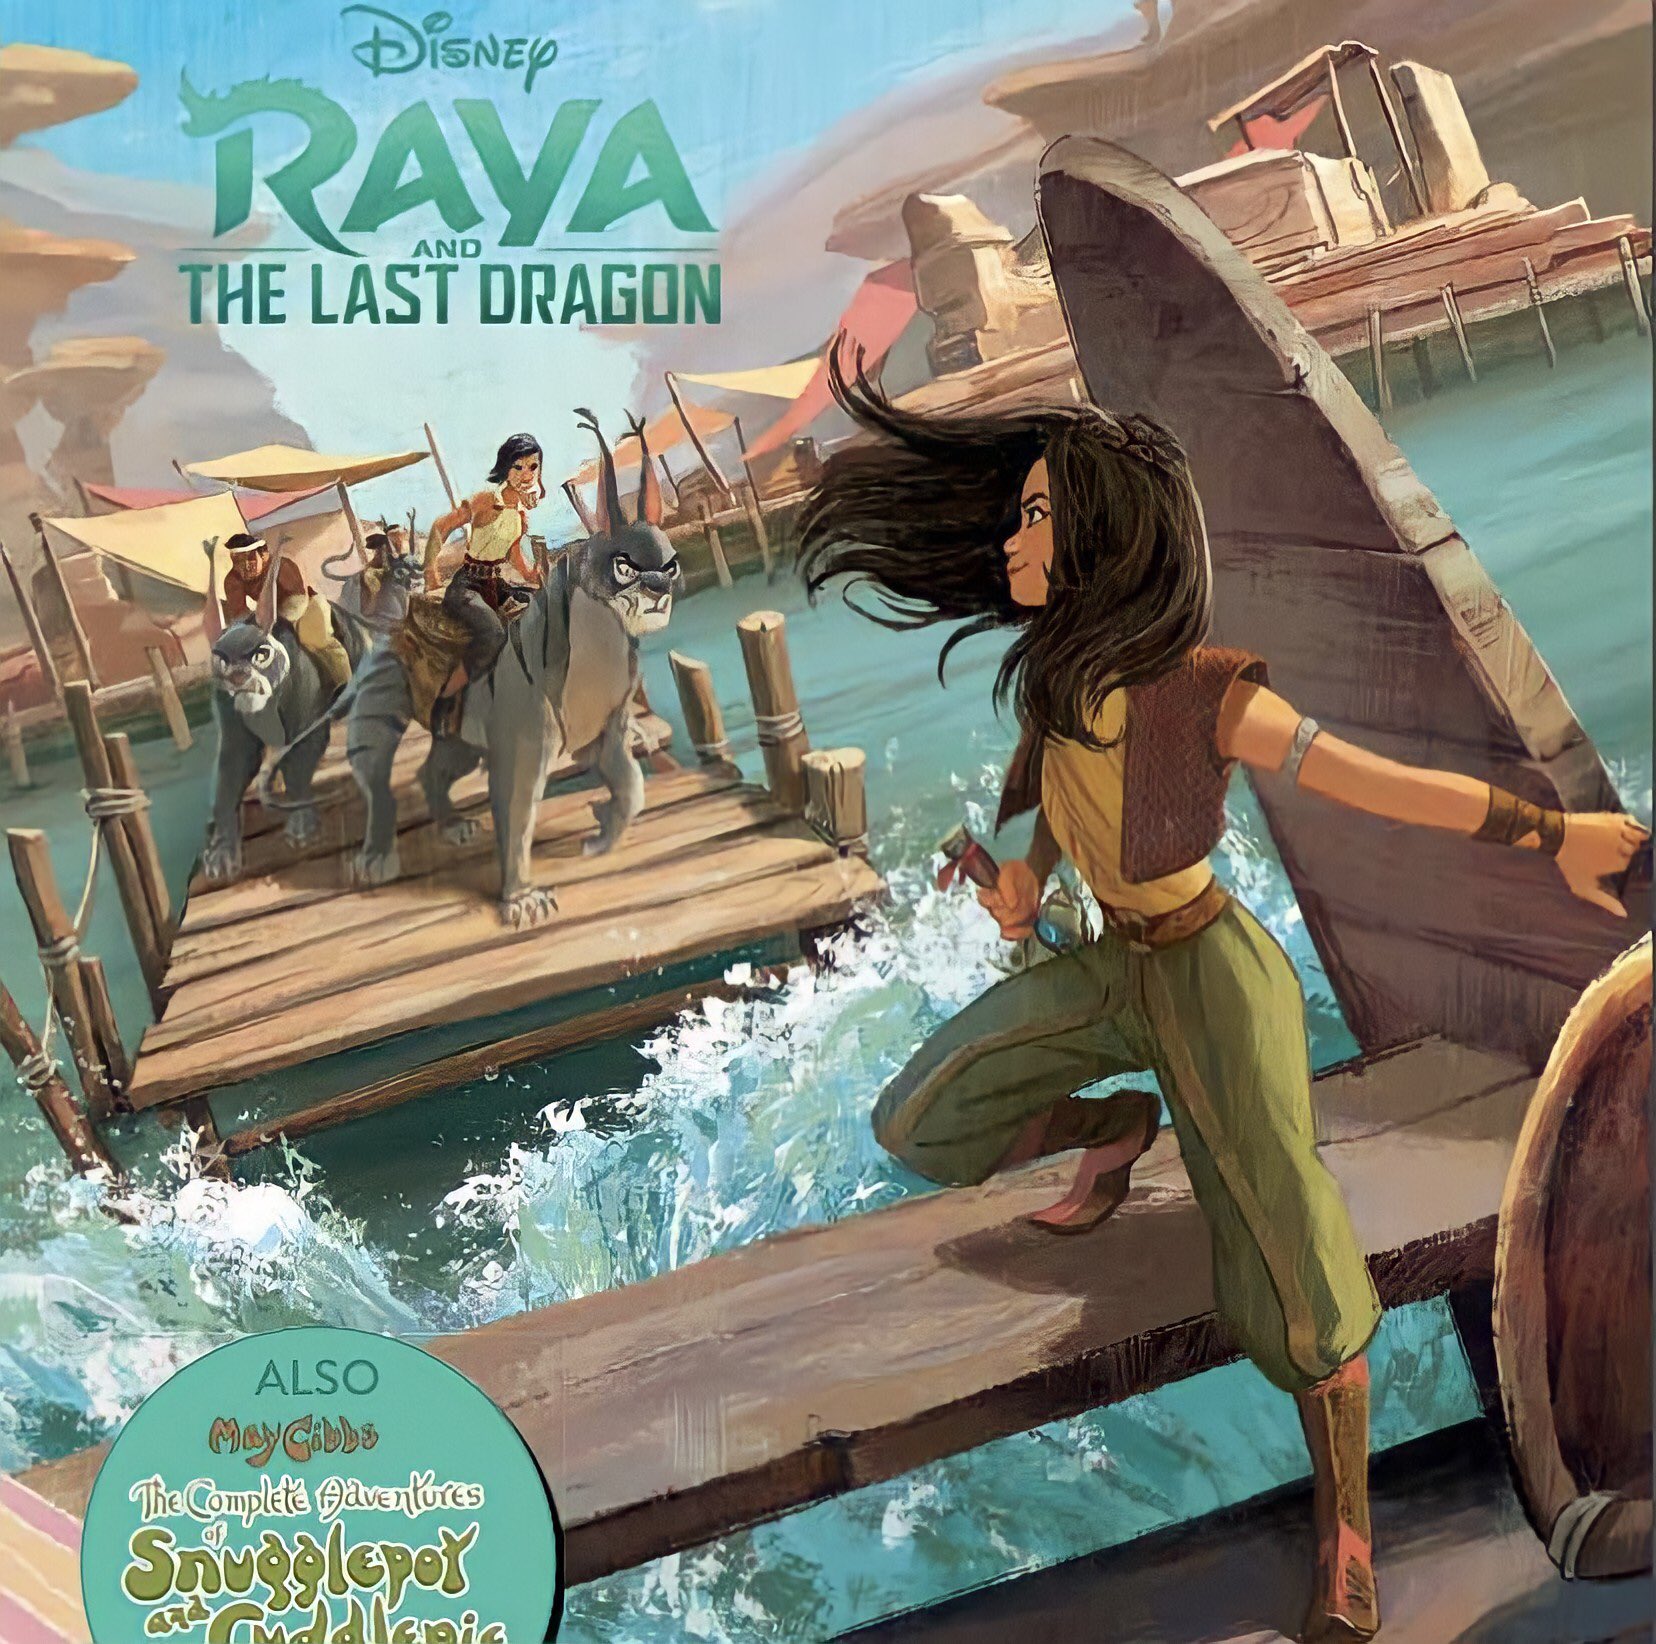 DisneyRaya - Raya et le Dernier Dragon [Walt Disney - 2021] - Page 7 EnMe7zRW4AA2h1R?format=jpg&name=large